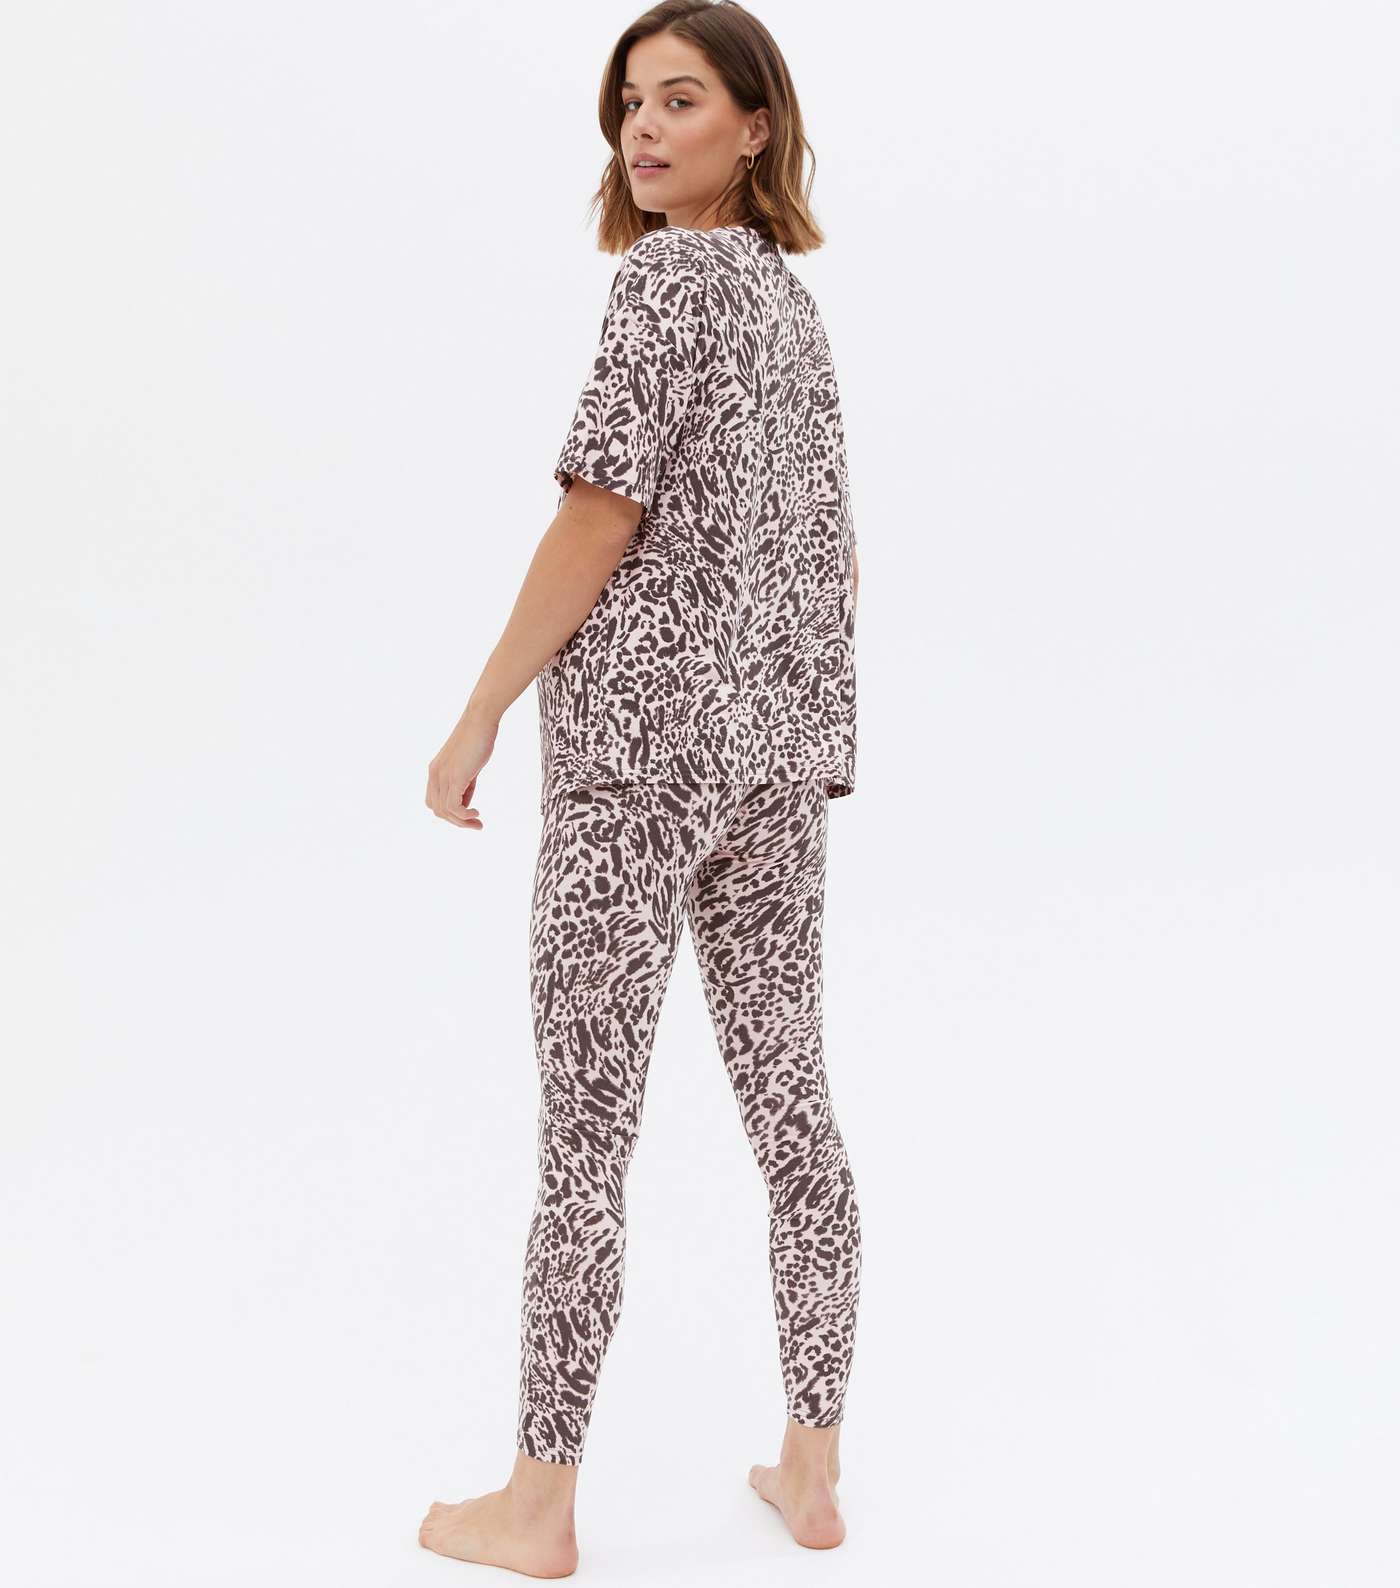 Maternity Pink Soft Touch Legging Pyjama Set with Animal Print Image 4